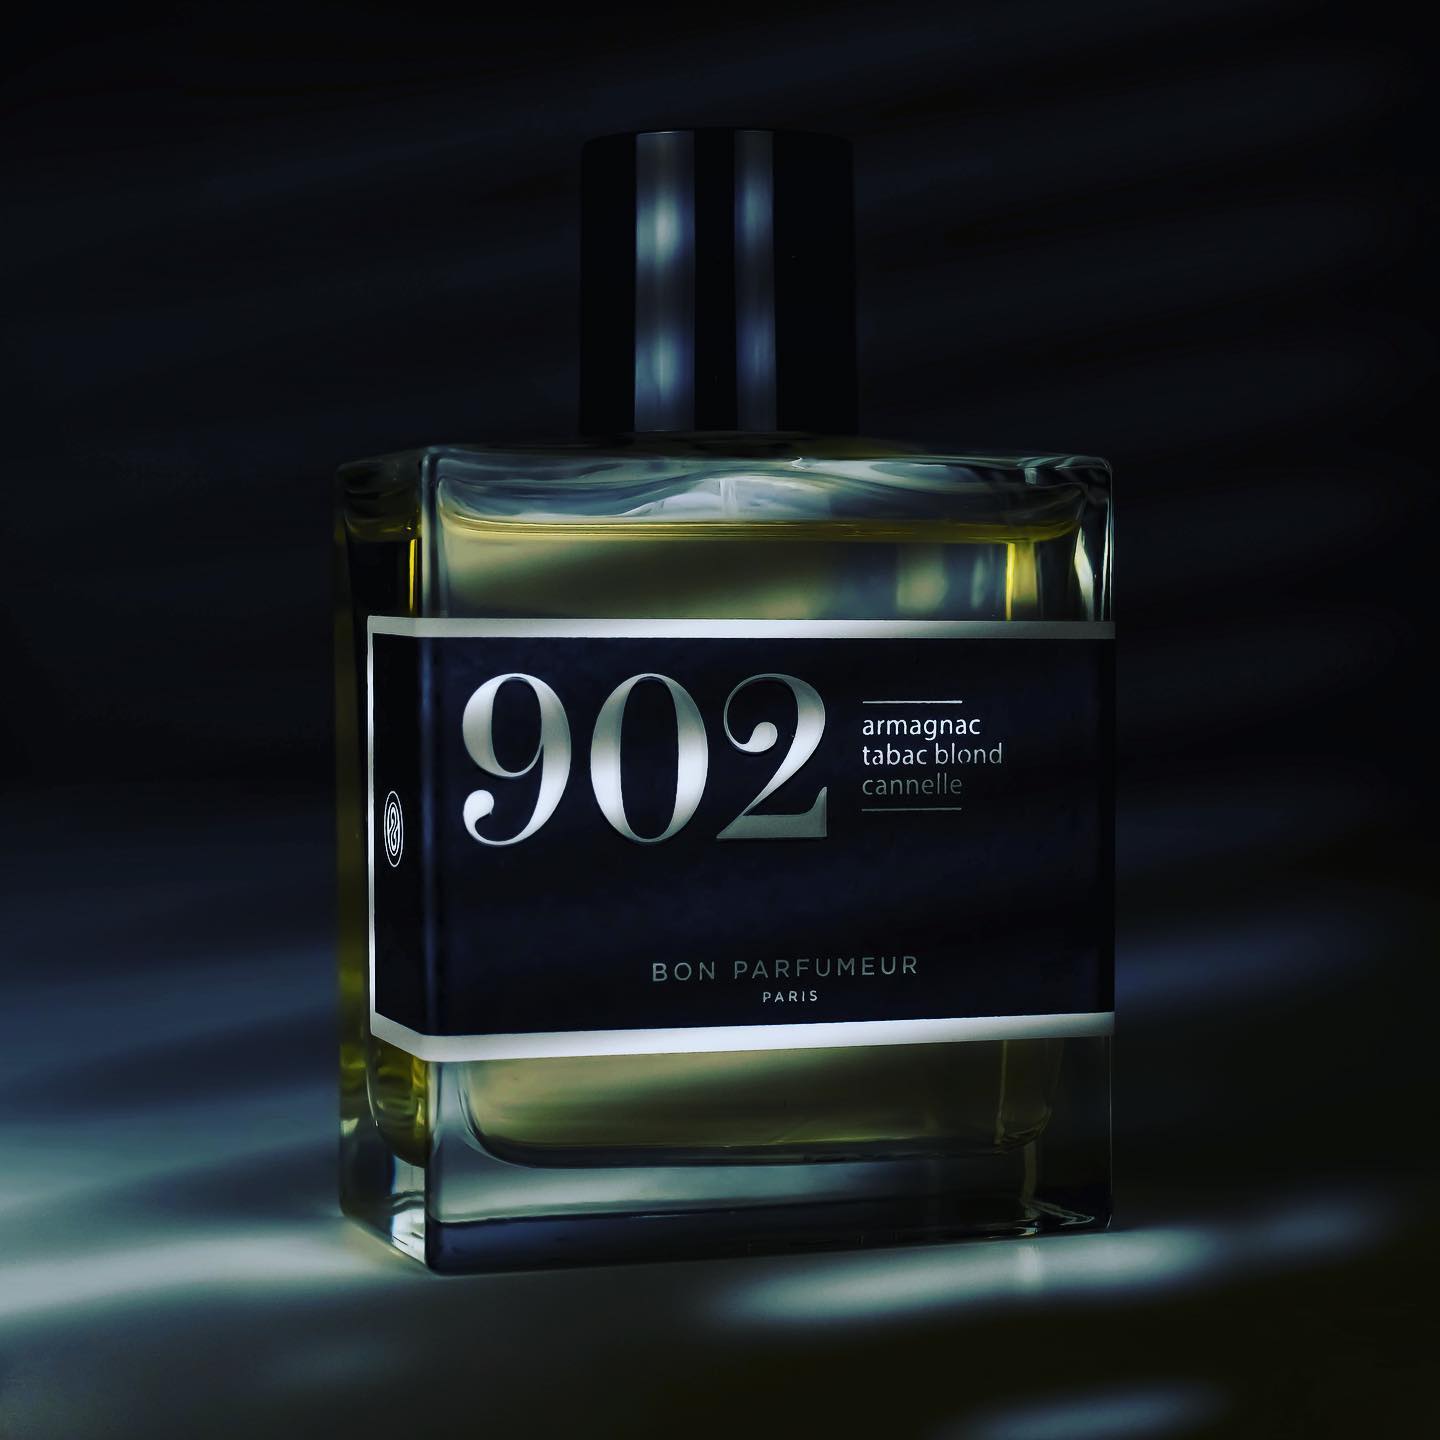 Bon Parfumeur | 902 armagnac, tabac blond & cannelle 100ML